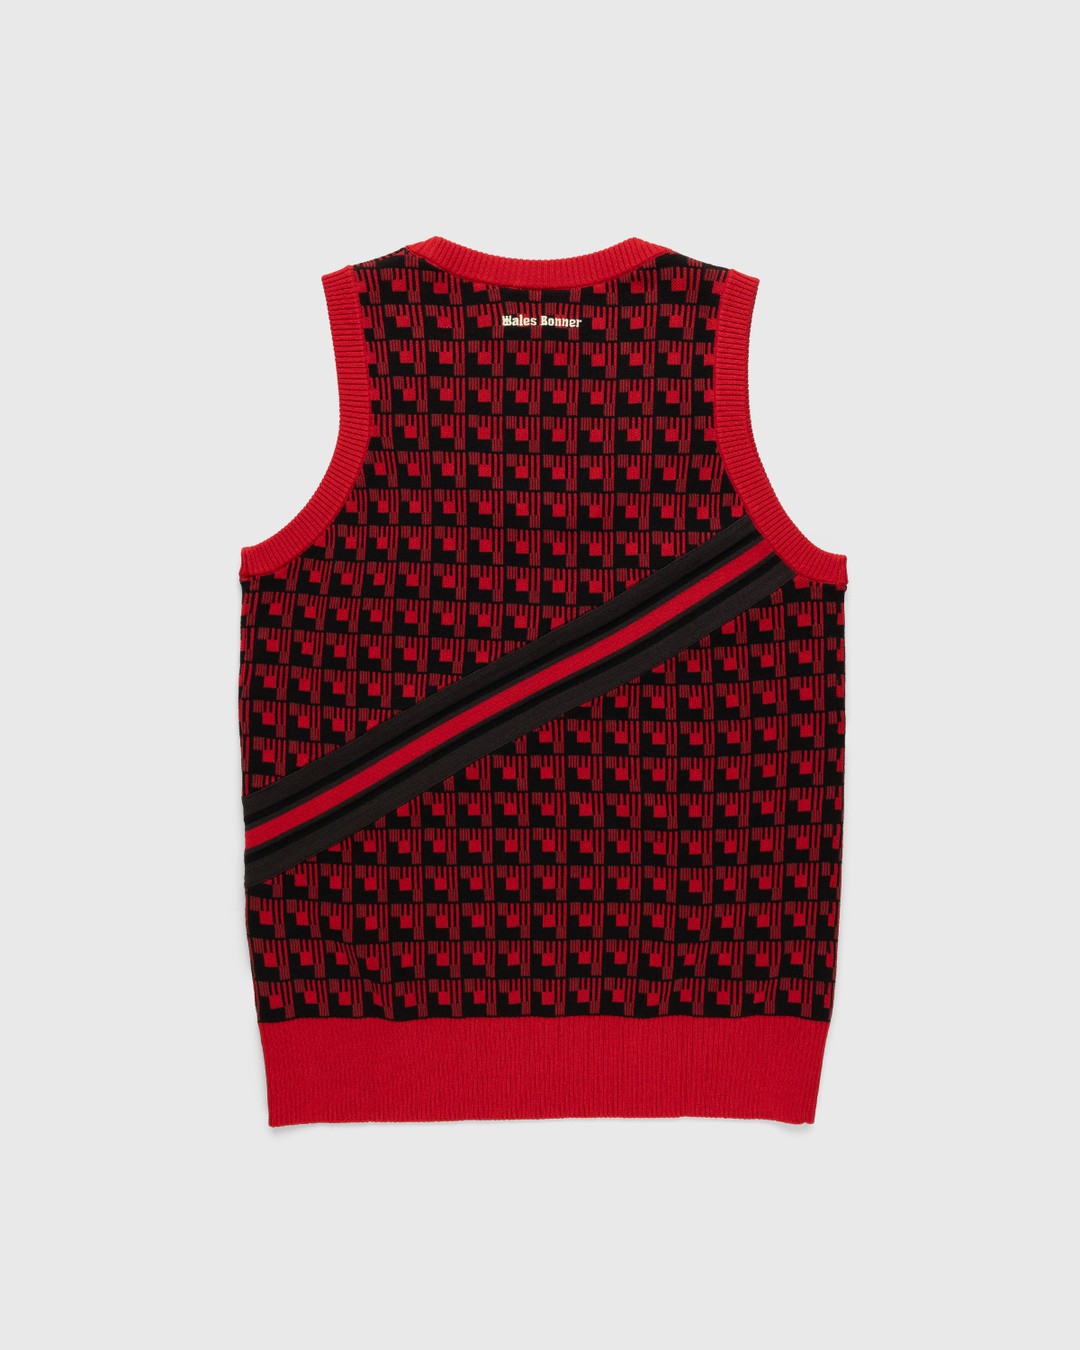 Adidas x Wales Bonner – WB Knit Vest Scarlet/Black - Knitwear - Red - Image 2